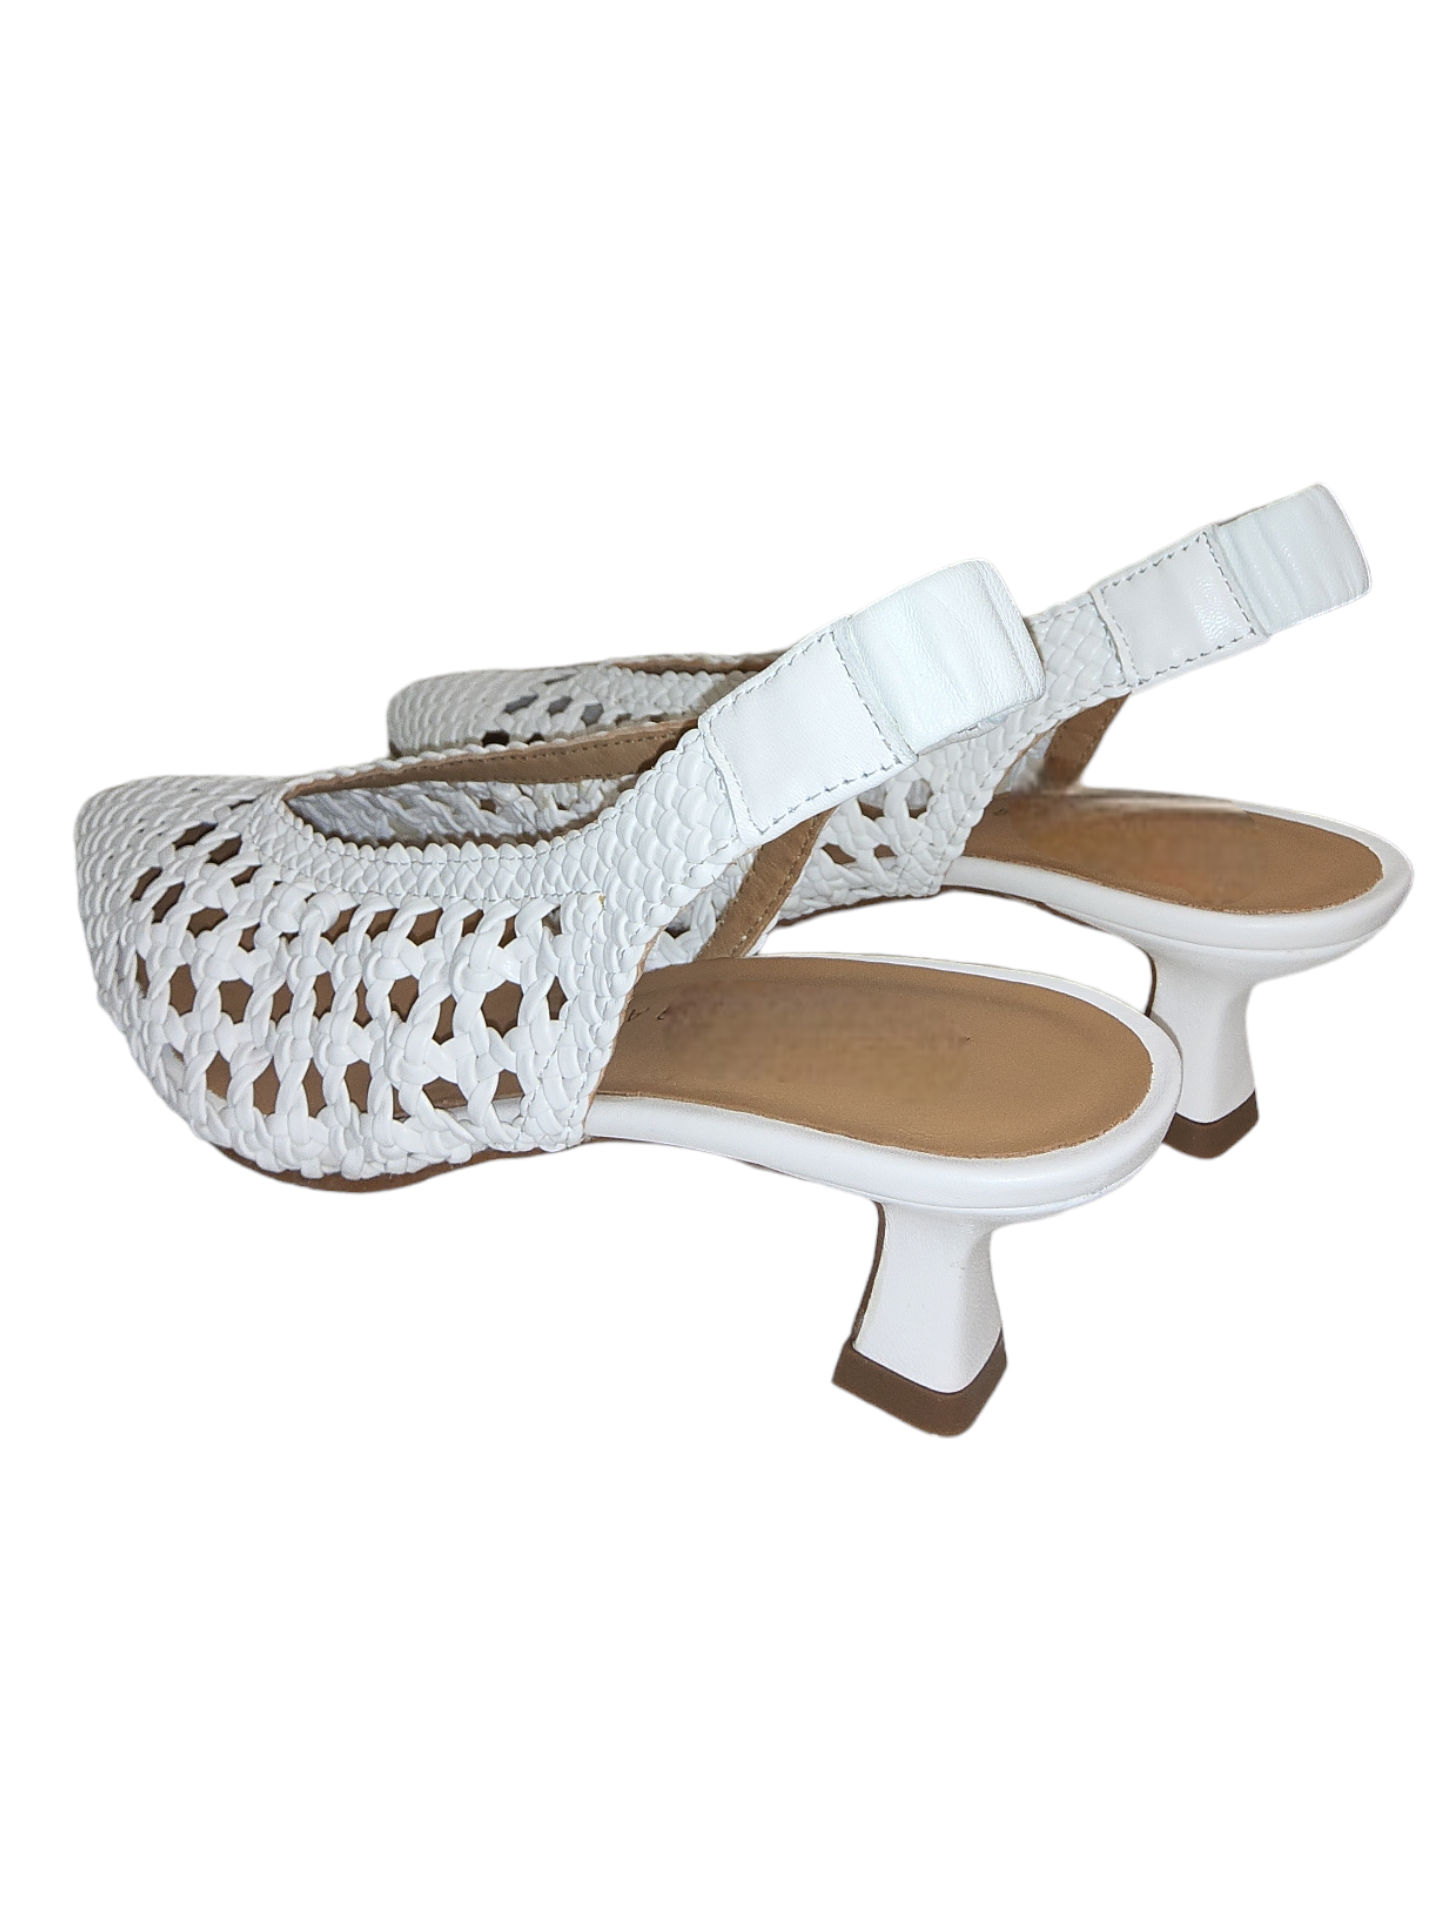 White weave leather slingback shoe